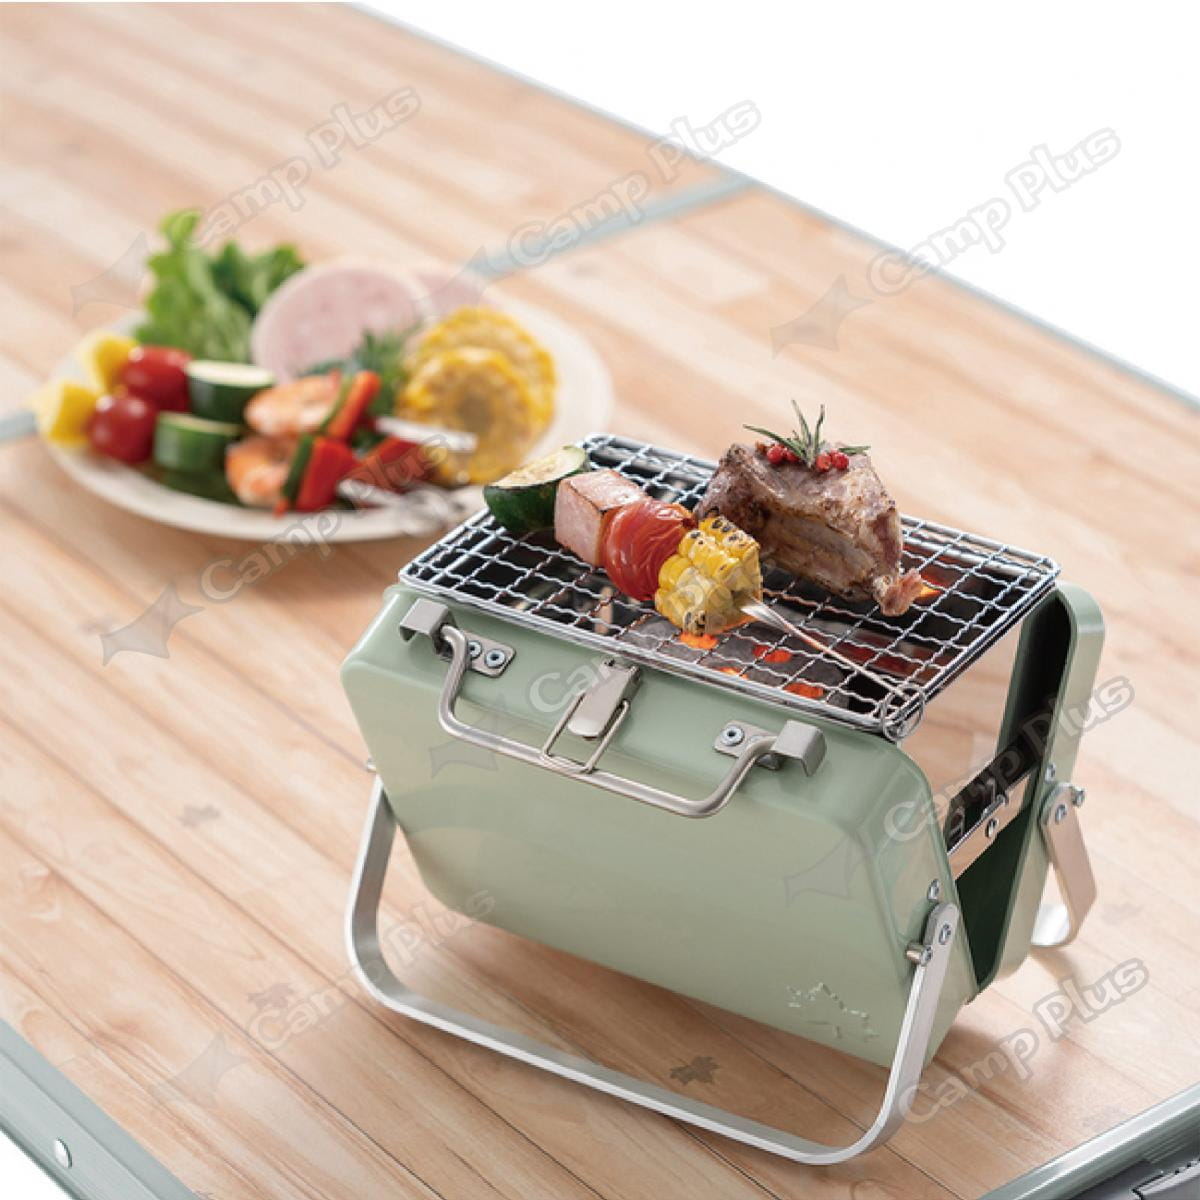 【LOGOS】手提箱型烤肉爐迷你型_LG81060970 (悠遊戶外) 7